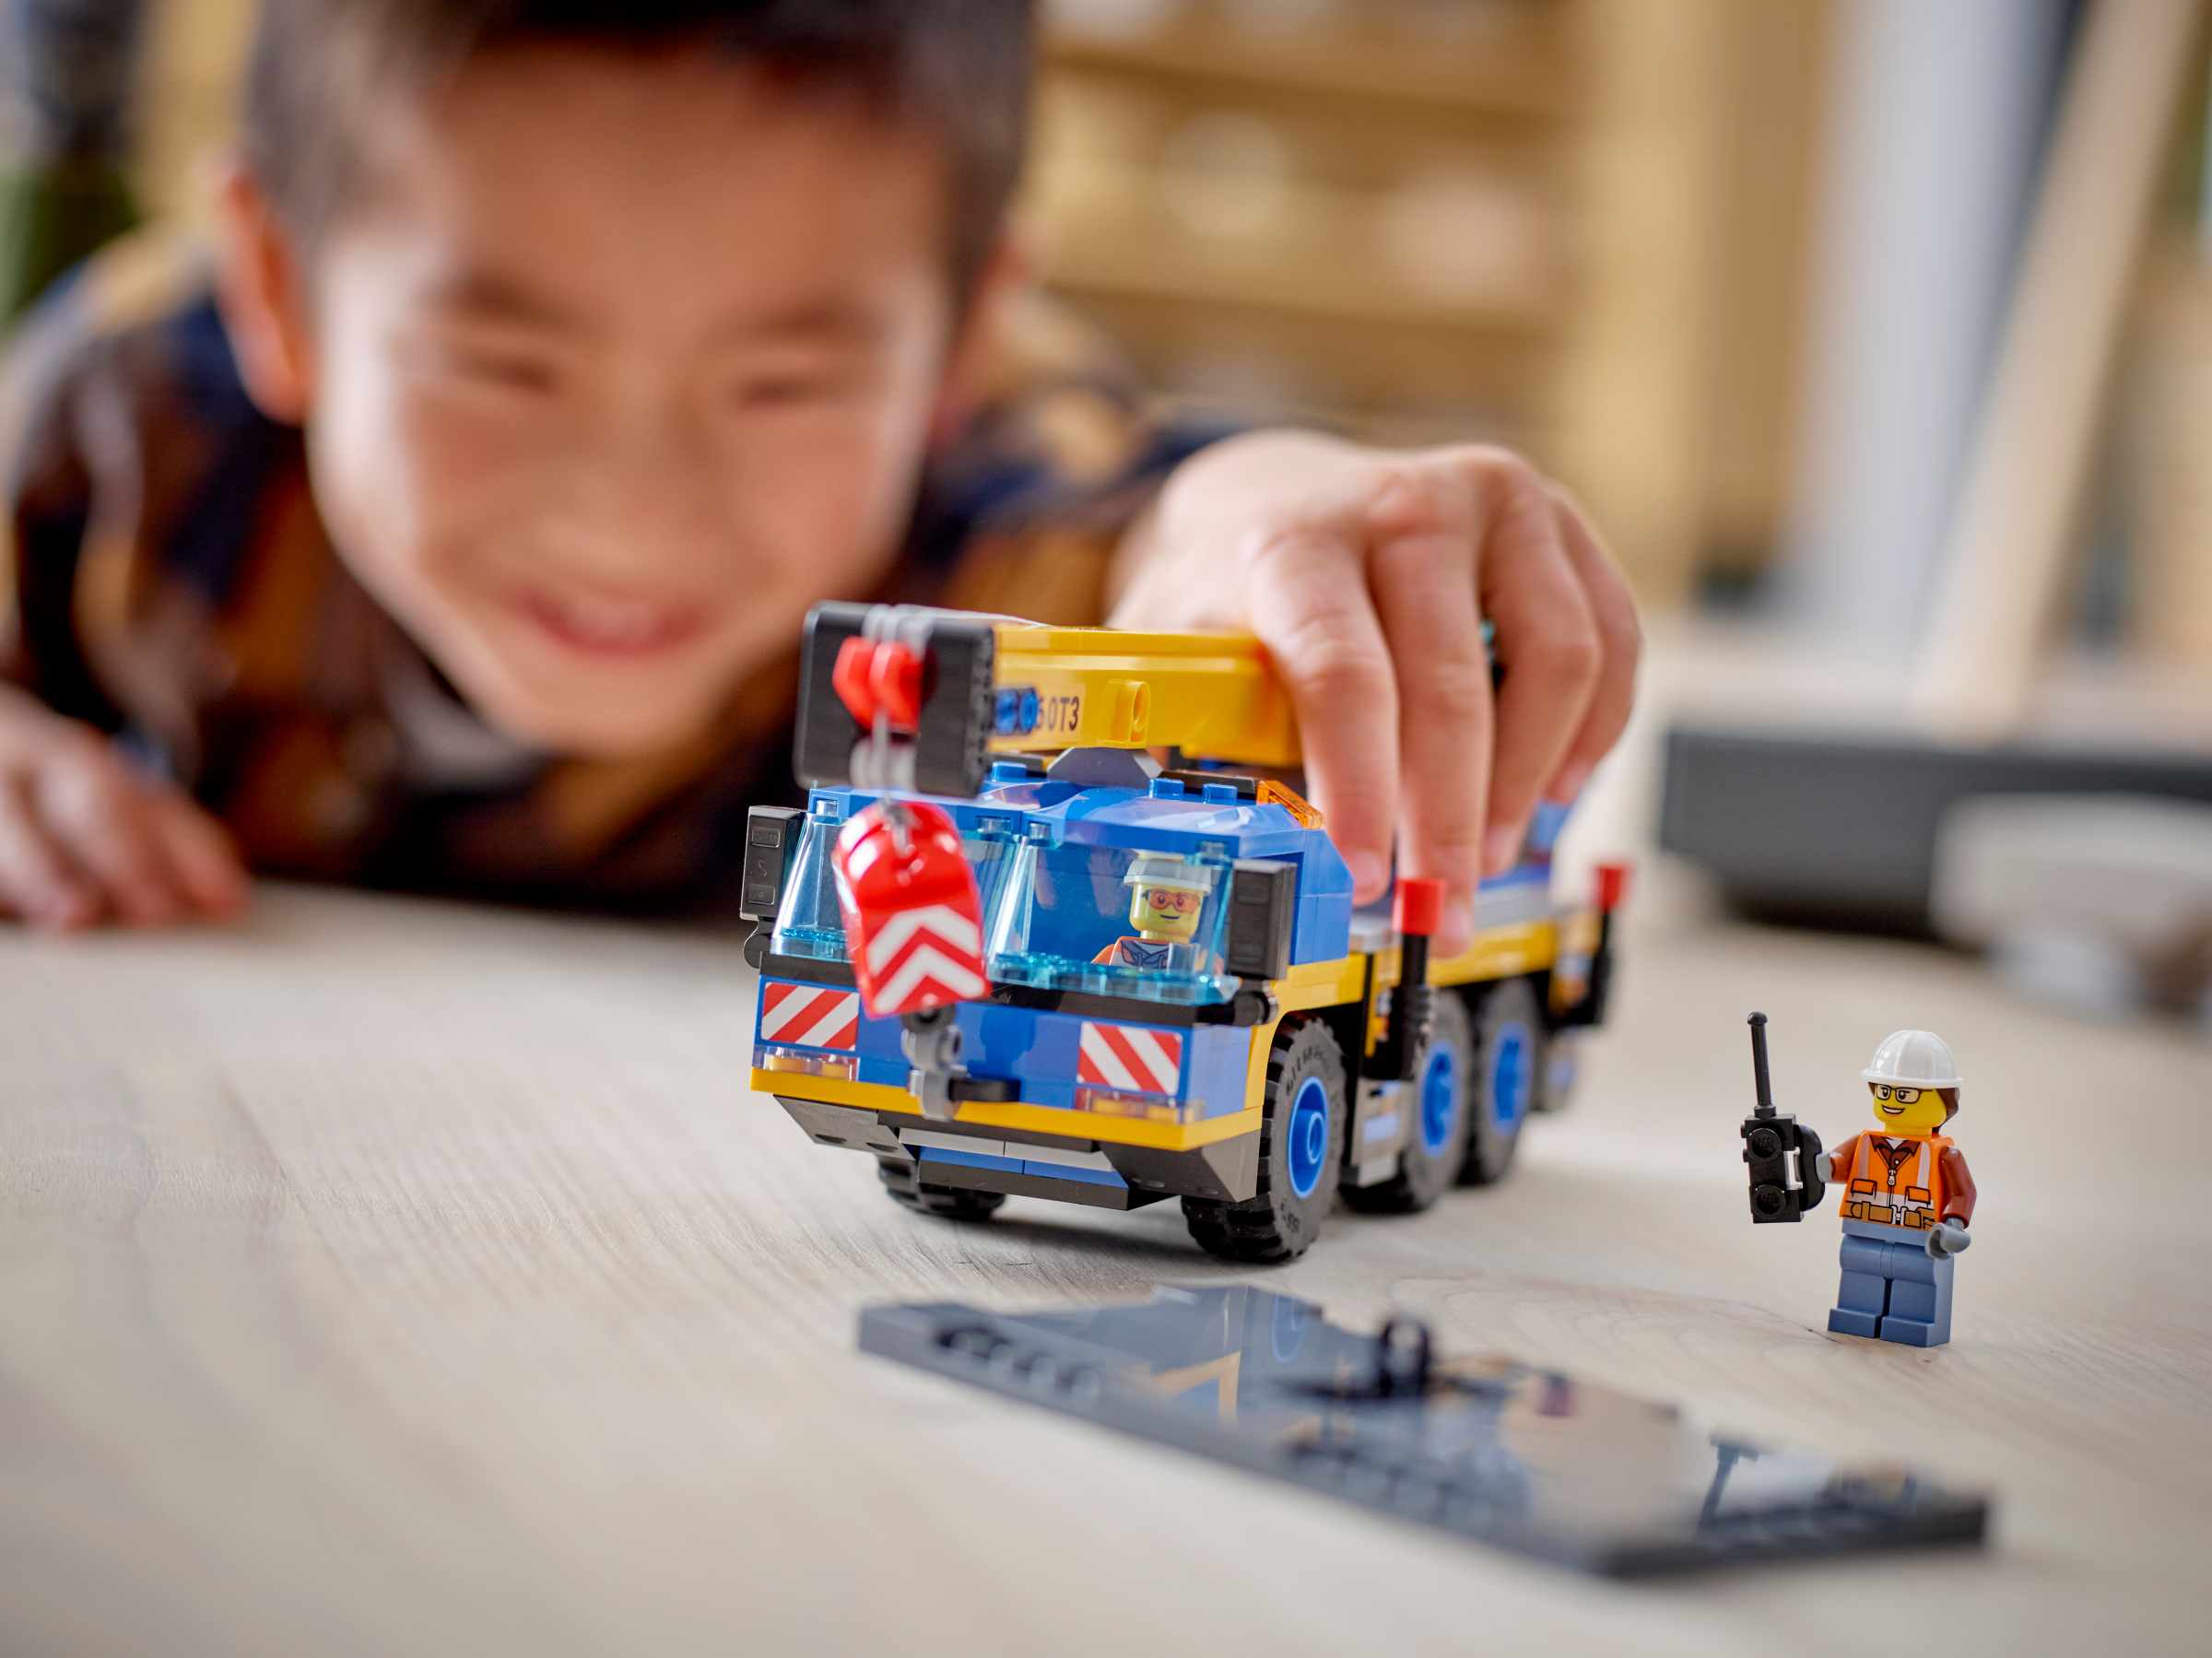 Chlapec si hraje s jeřábem ze stavebnice LEGO